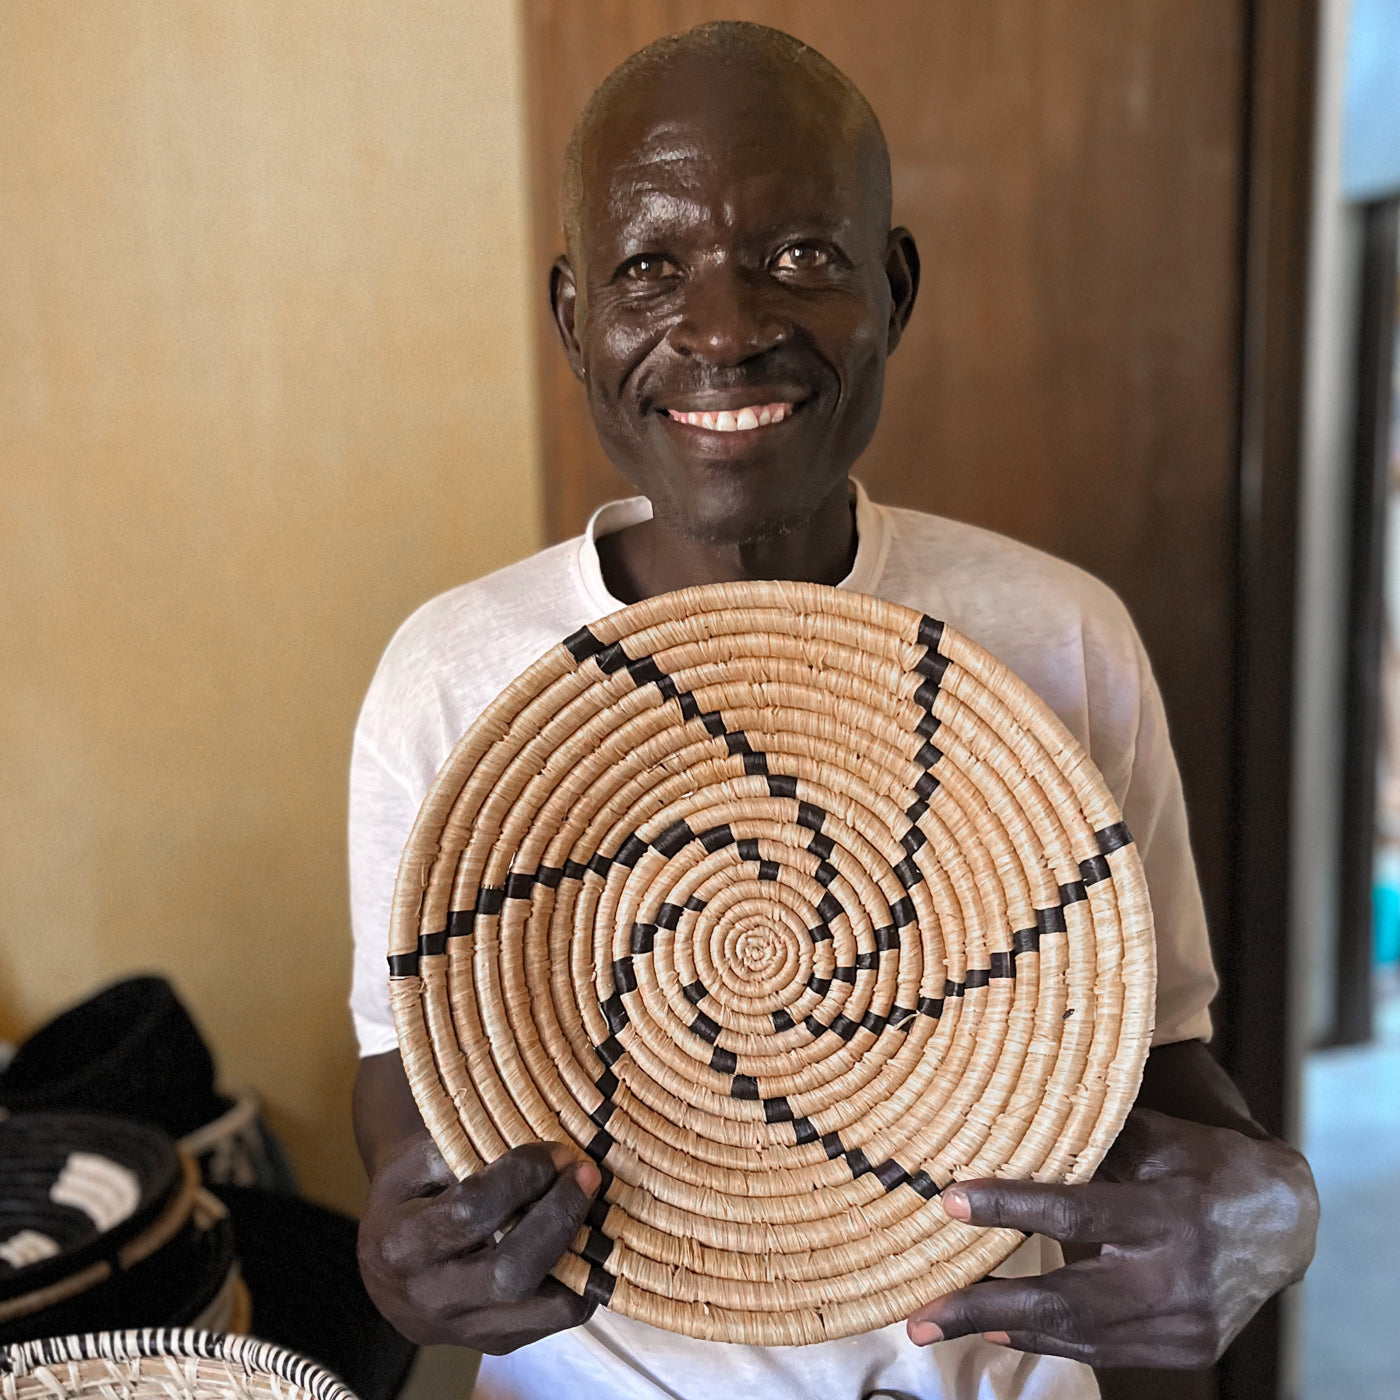 JustOne's tan basket with black lines handwoven in Uganda